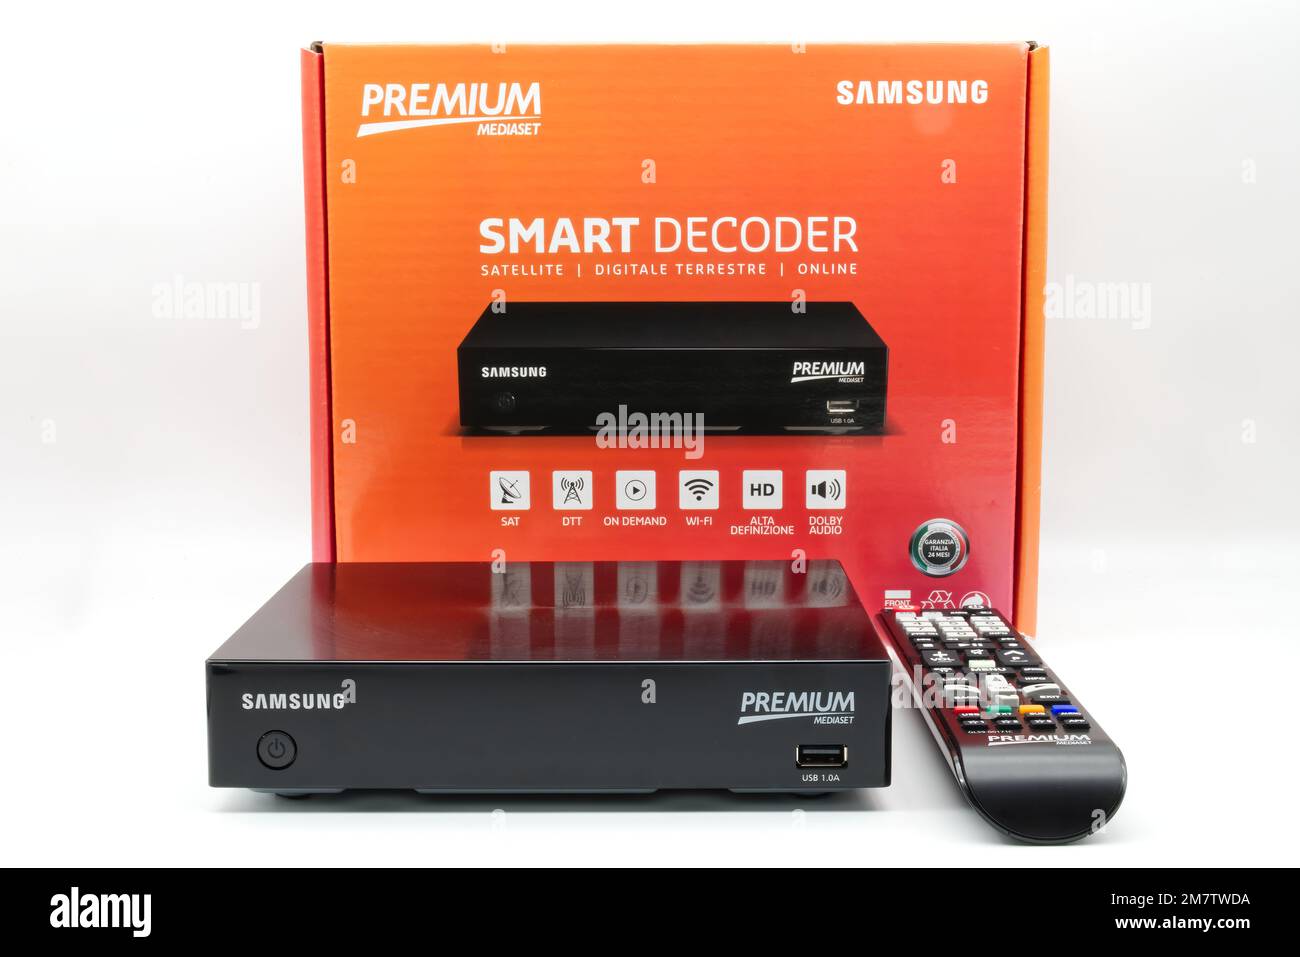 Samsung Premium Mediaset Smart Decoder. Satellite, Digitale Terrestre,  Online. TV Smart decoder isolated on white Stock Photo - Alamy